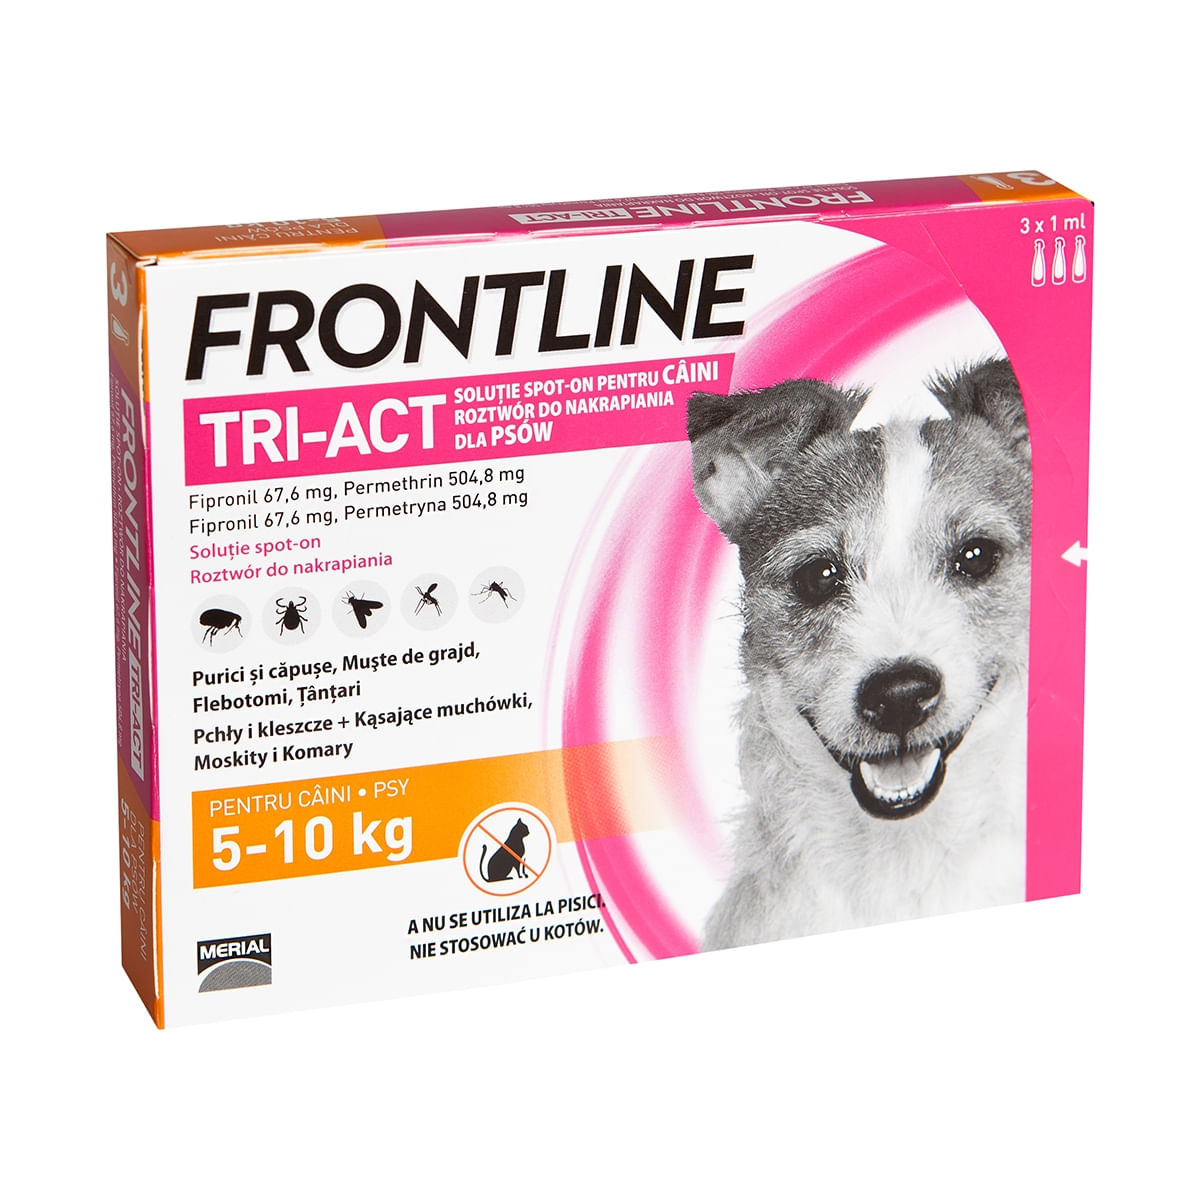 Frontline Tri-Act, solutie spot-on antiparazitară, câini FRONTLINE Tri-Act, spot-on, soluție antiparazitară, câini 5-10kg, 3 pipete